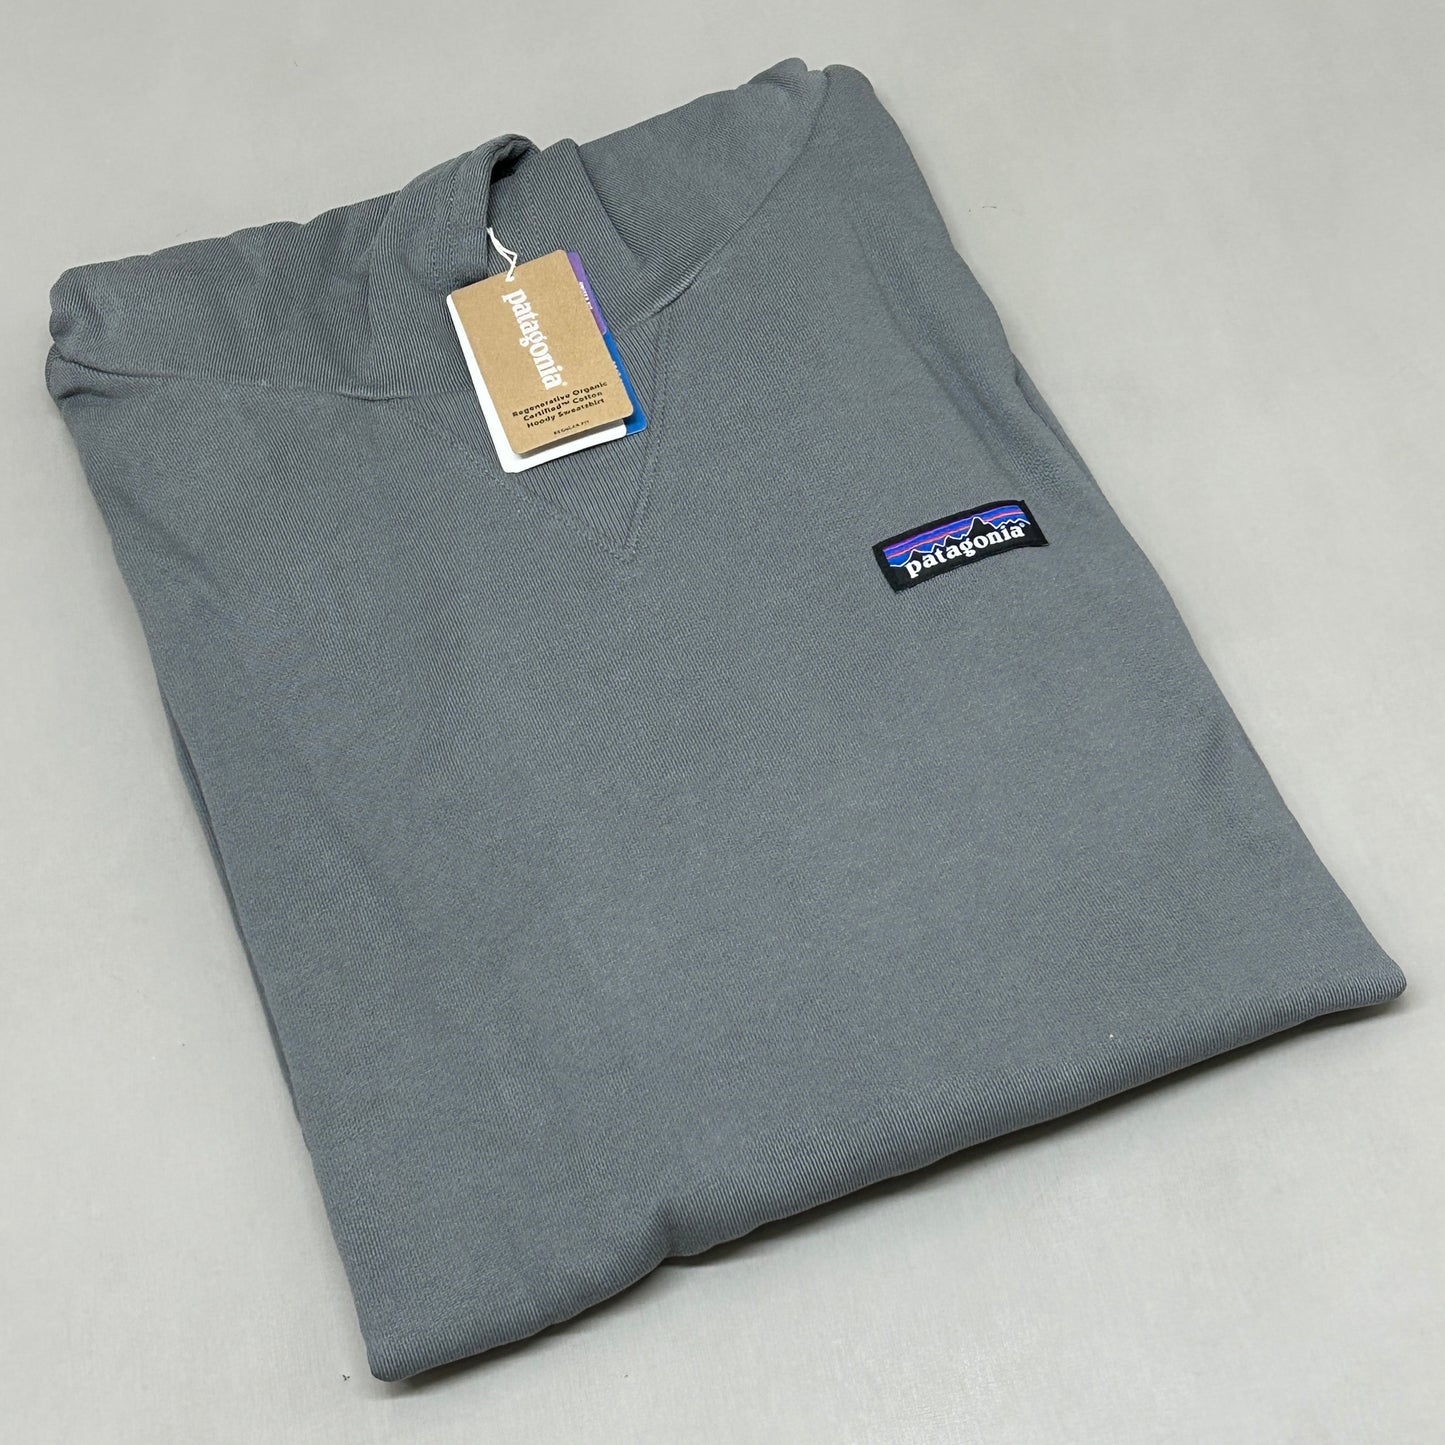 PATAGONIA Regenerative Organic Cotton Hoody Sweatshirt Sz S Noble Grey (New)